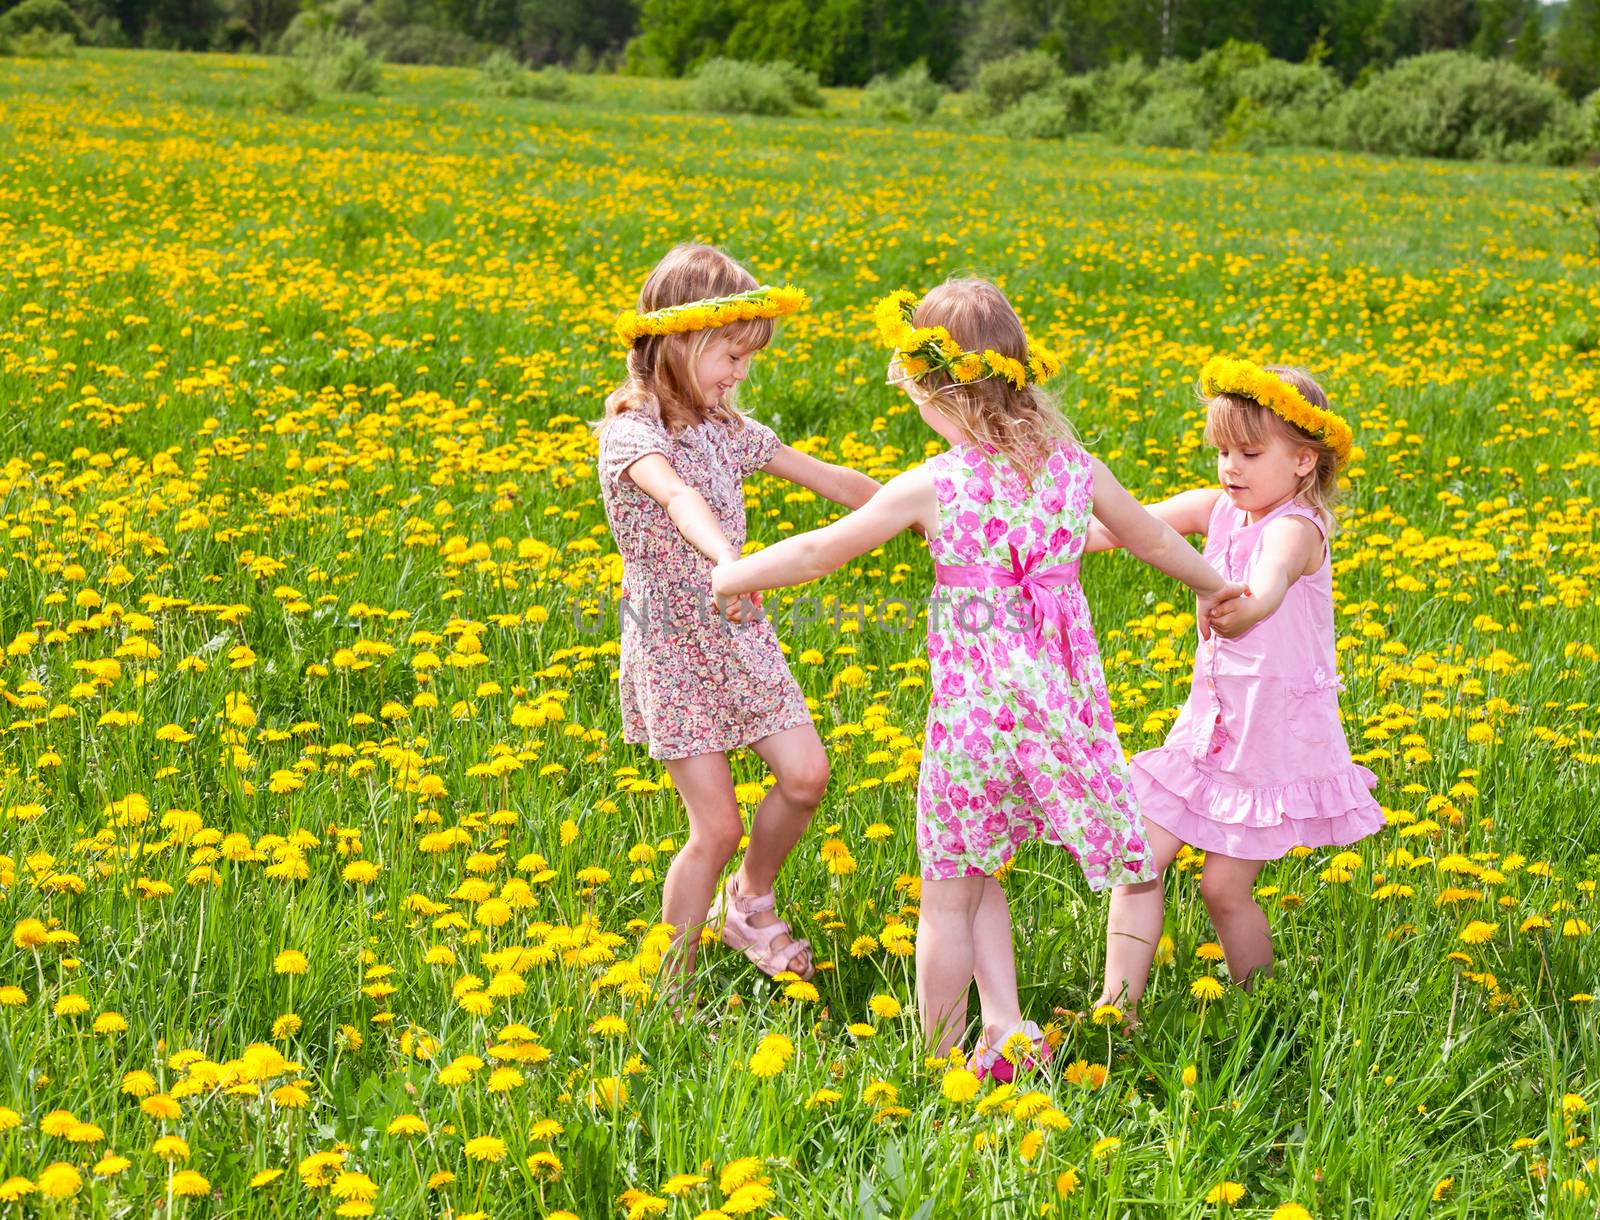 Children playing on a dandelion field by naumoid